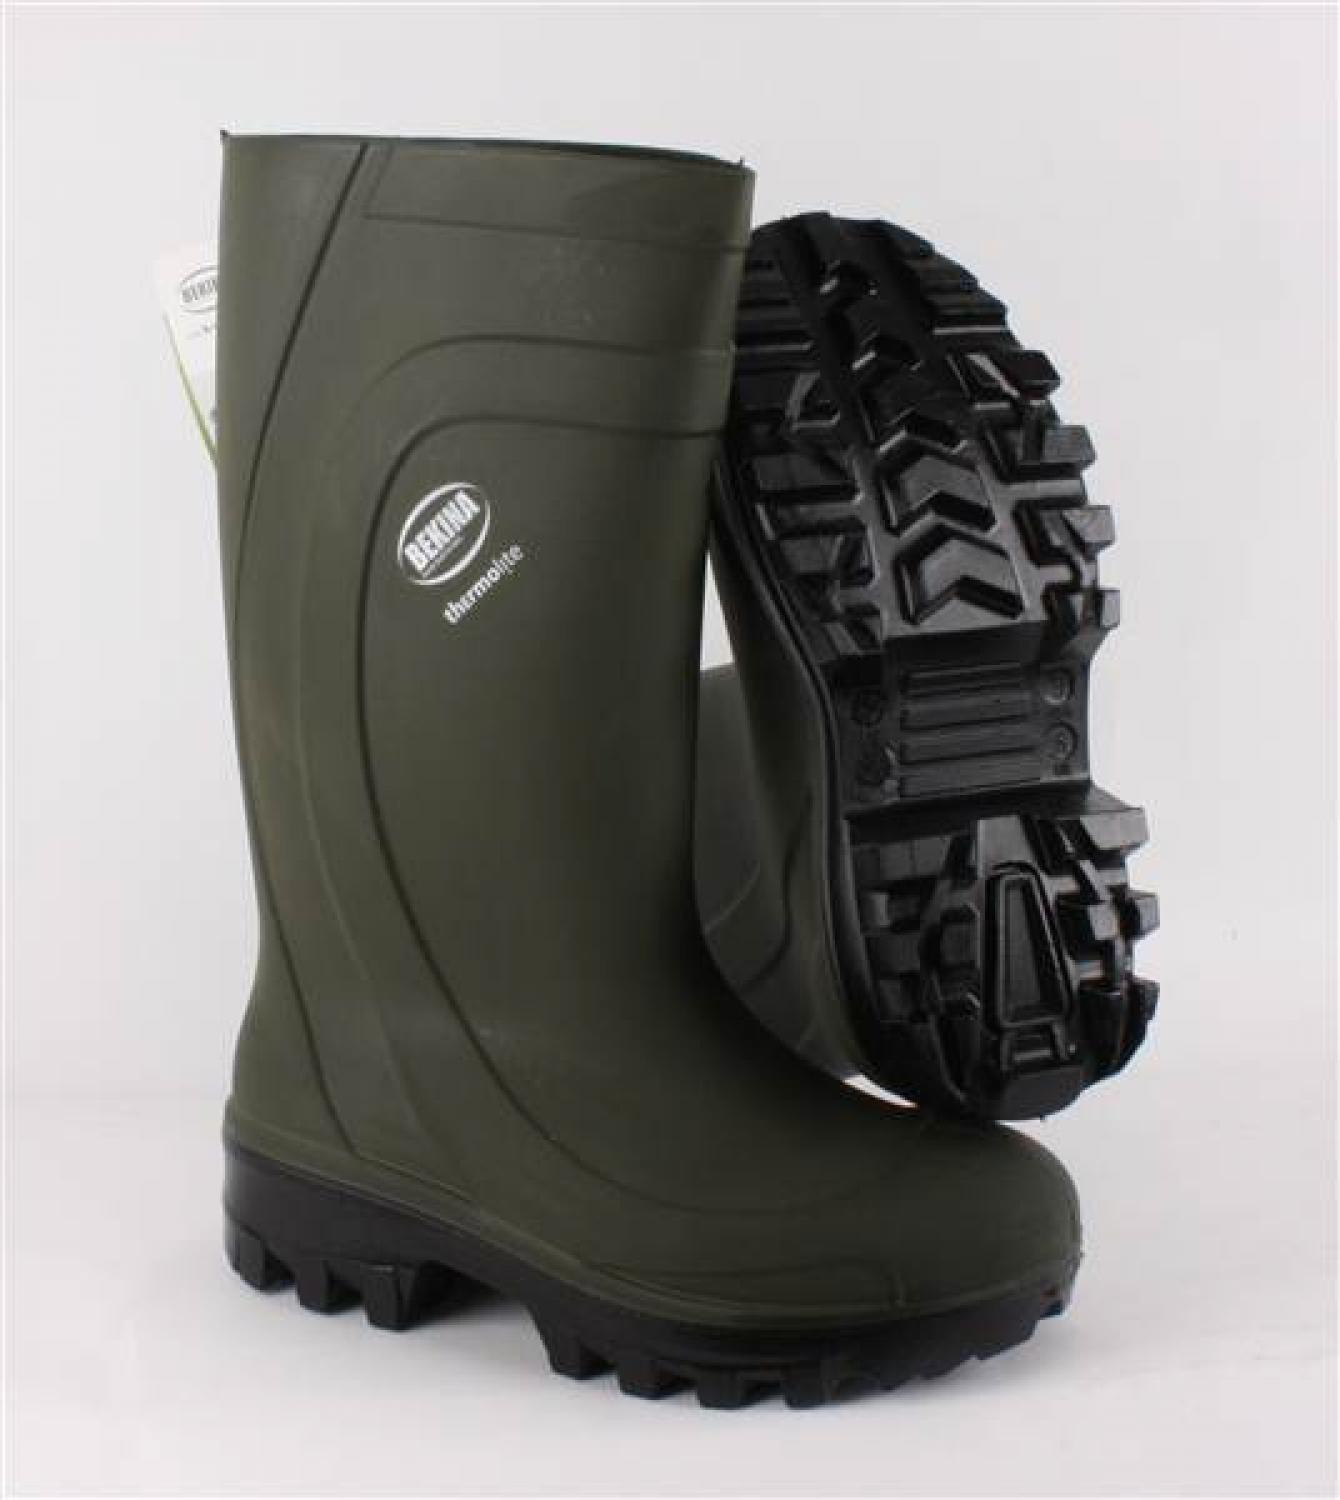 bekina thermolite boots canada